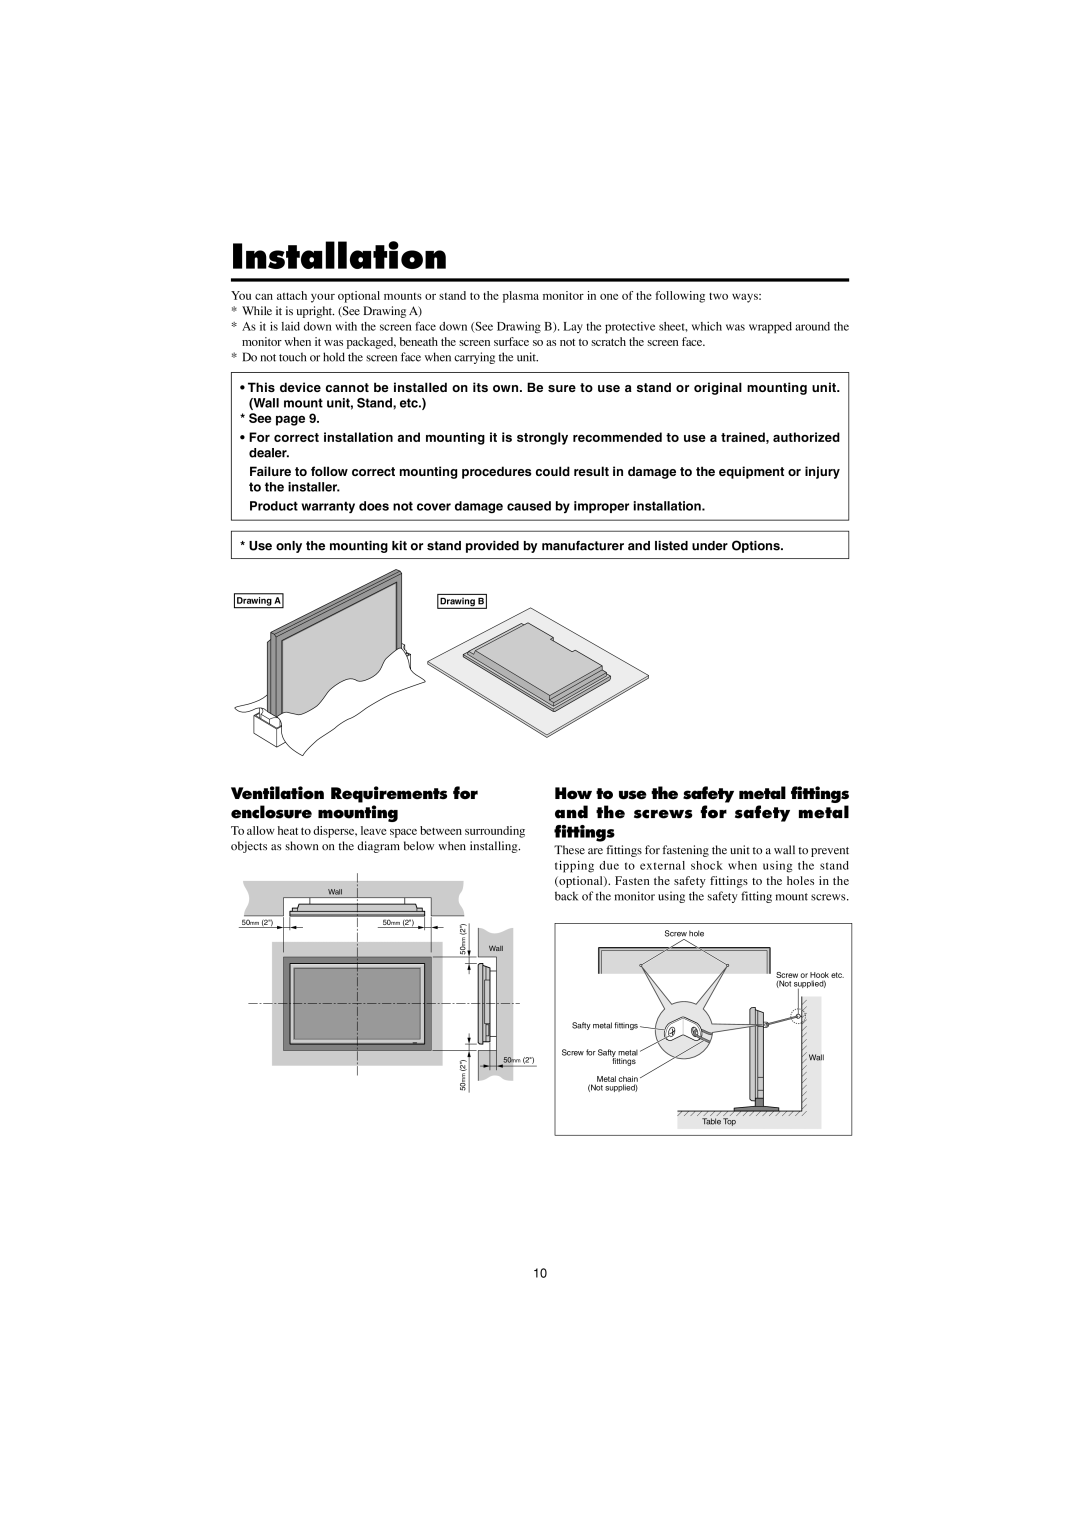 Marantz PD4230V manual Installation, Ventilation Requirements for enclosure mounting 